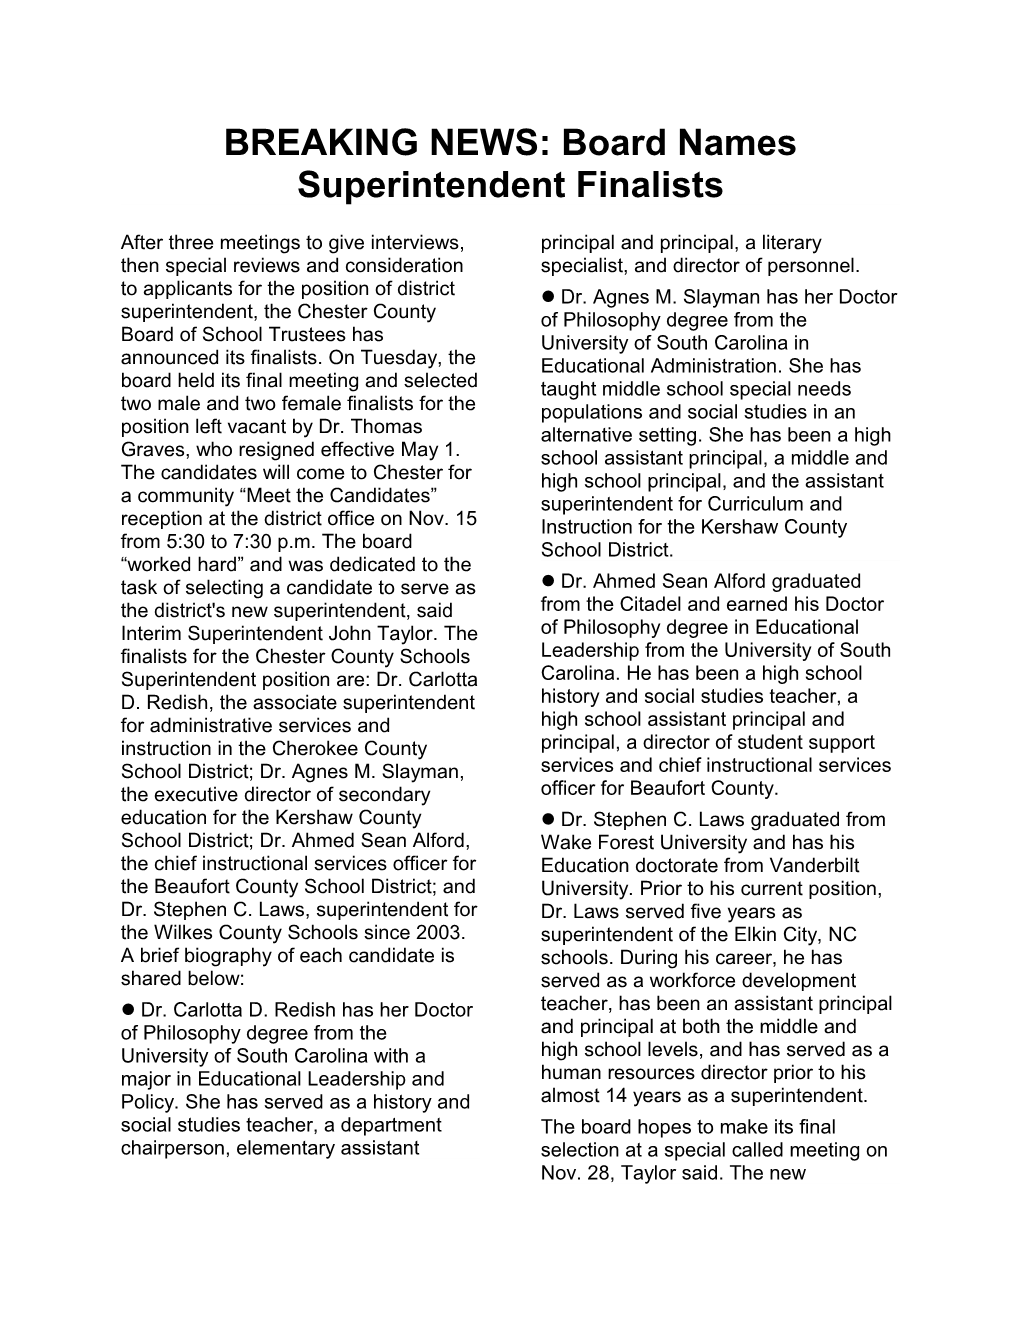 BREAKING NEWS: Board Names Superintendent Finalists